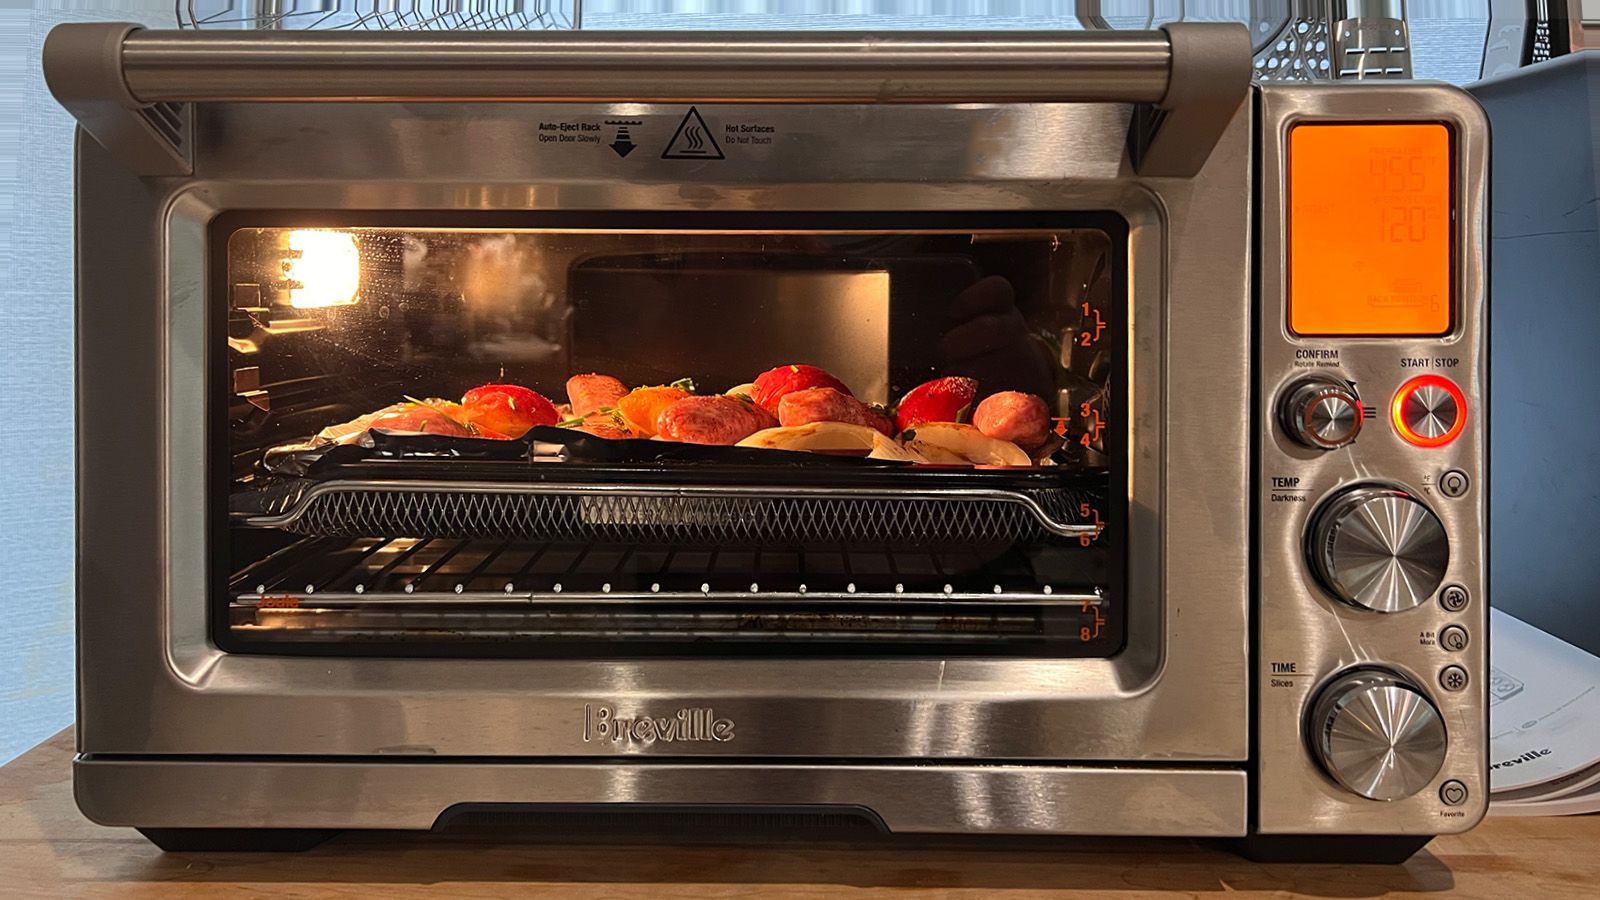 Breville Smart Oven Air Fryer